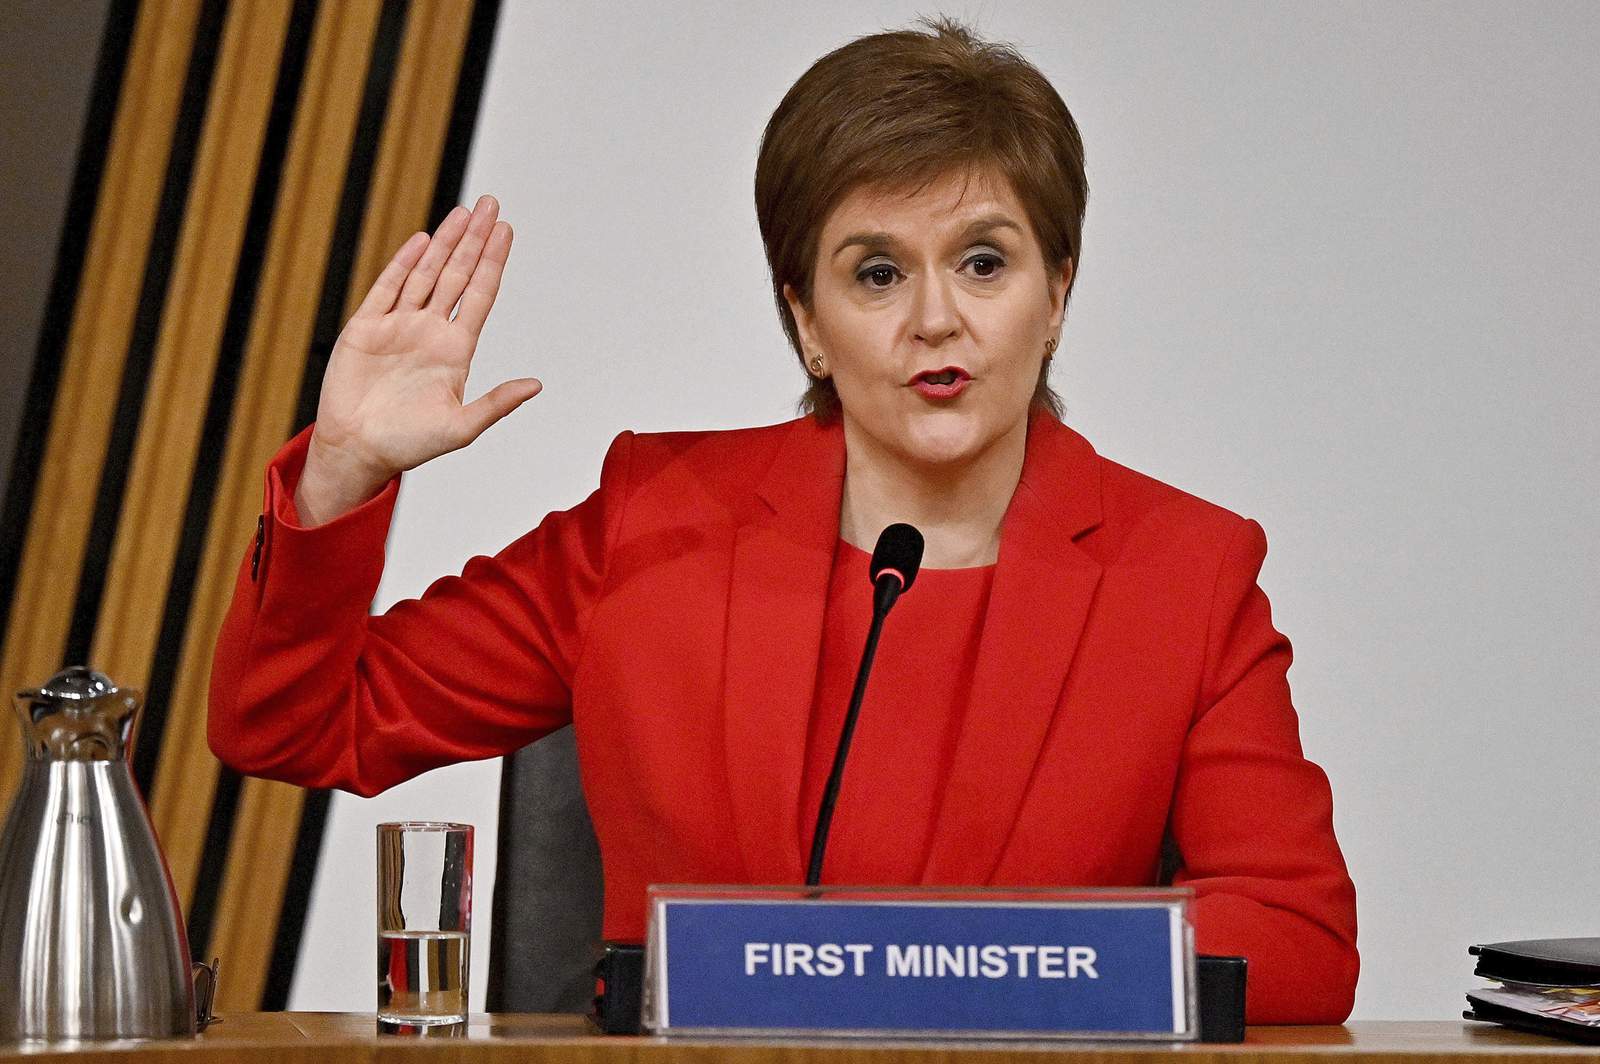 Under-fire Scottish leader defends handling of sex claims